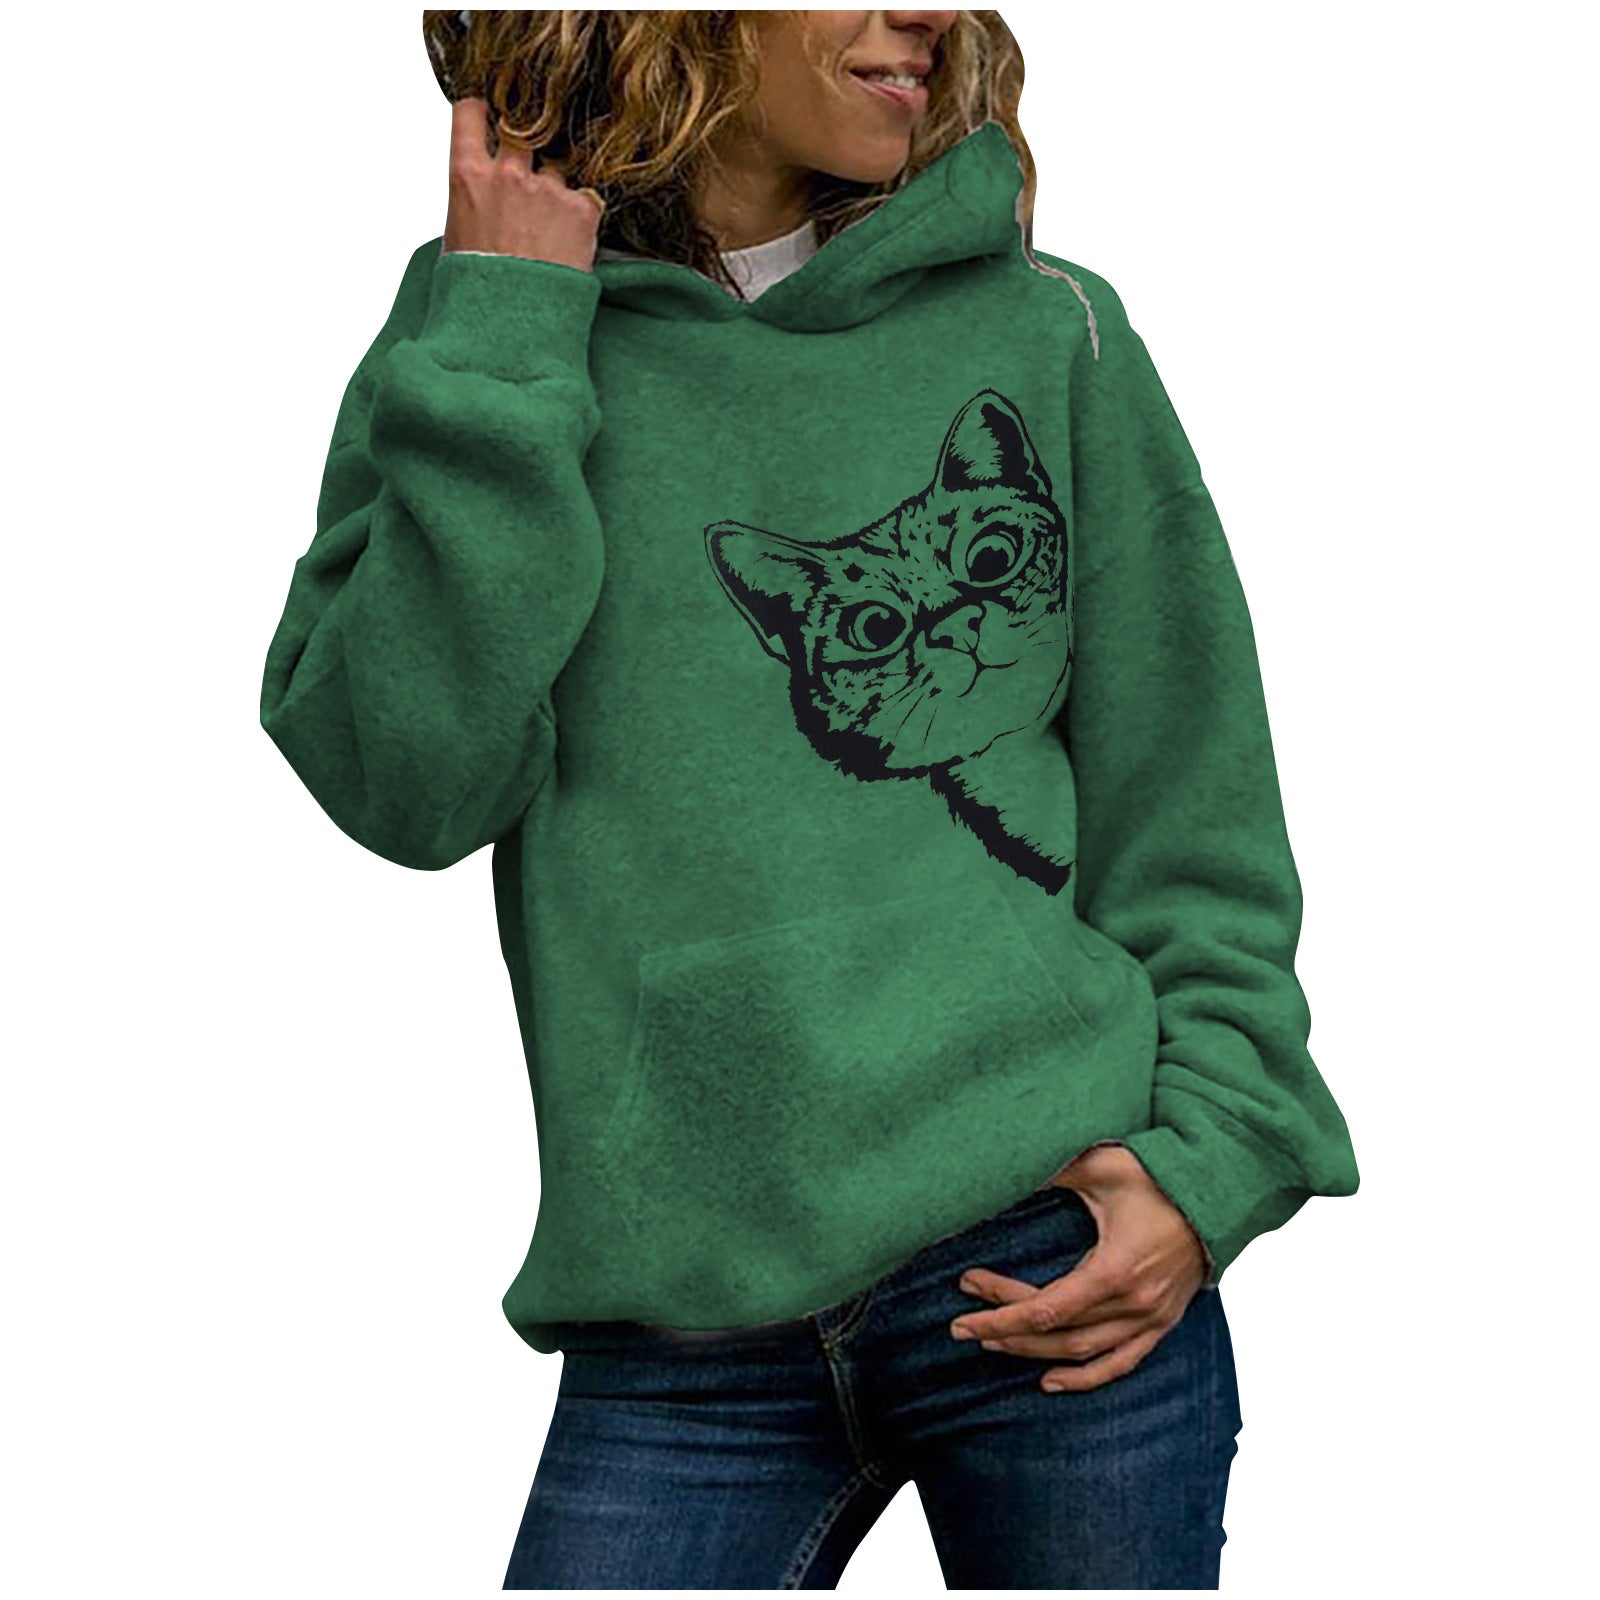 Cozy Chic Cat Pattern Hooded Sweater for Women - Slim Fit Fleece-Lined Leisure Hoodie - Ricky's Garage